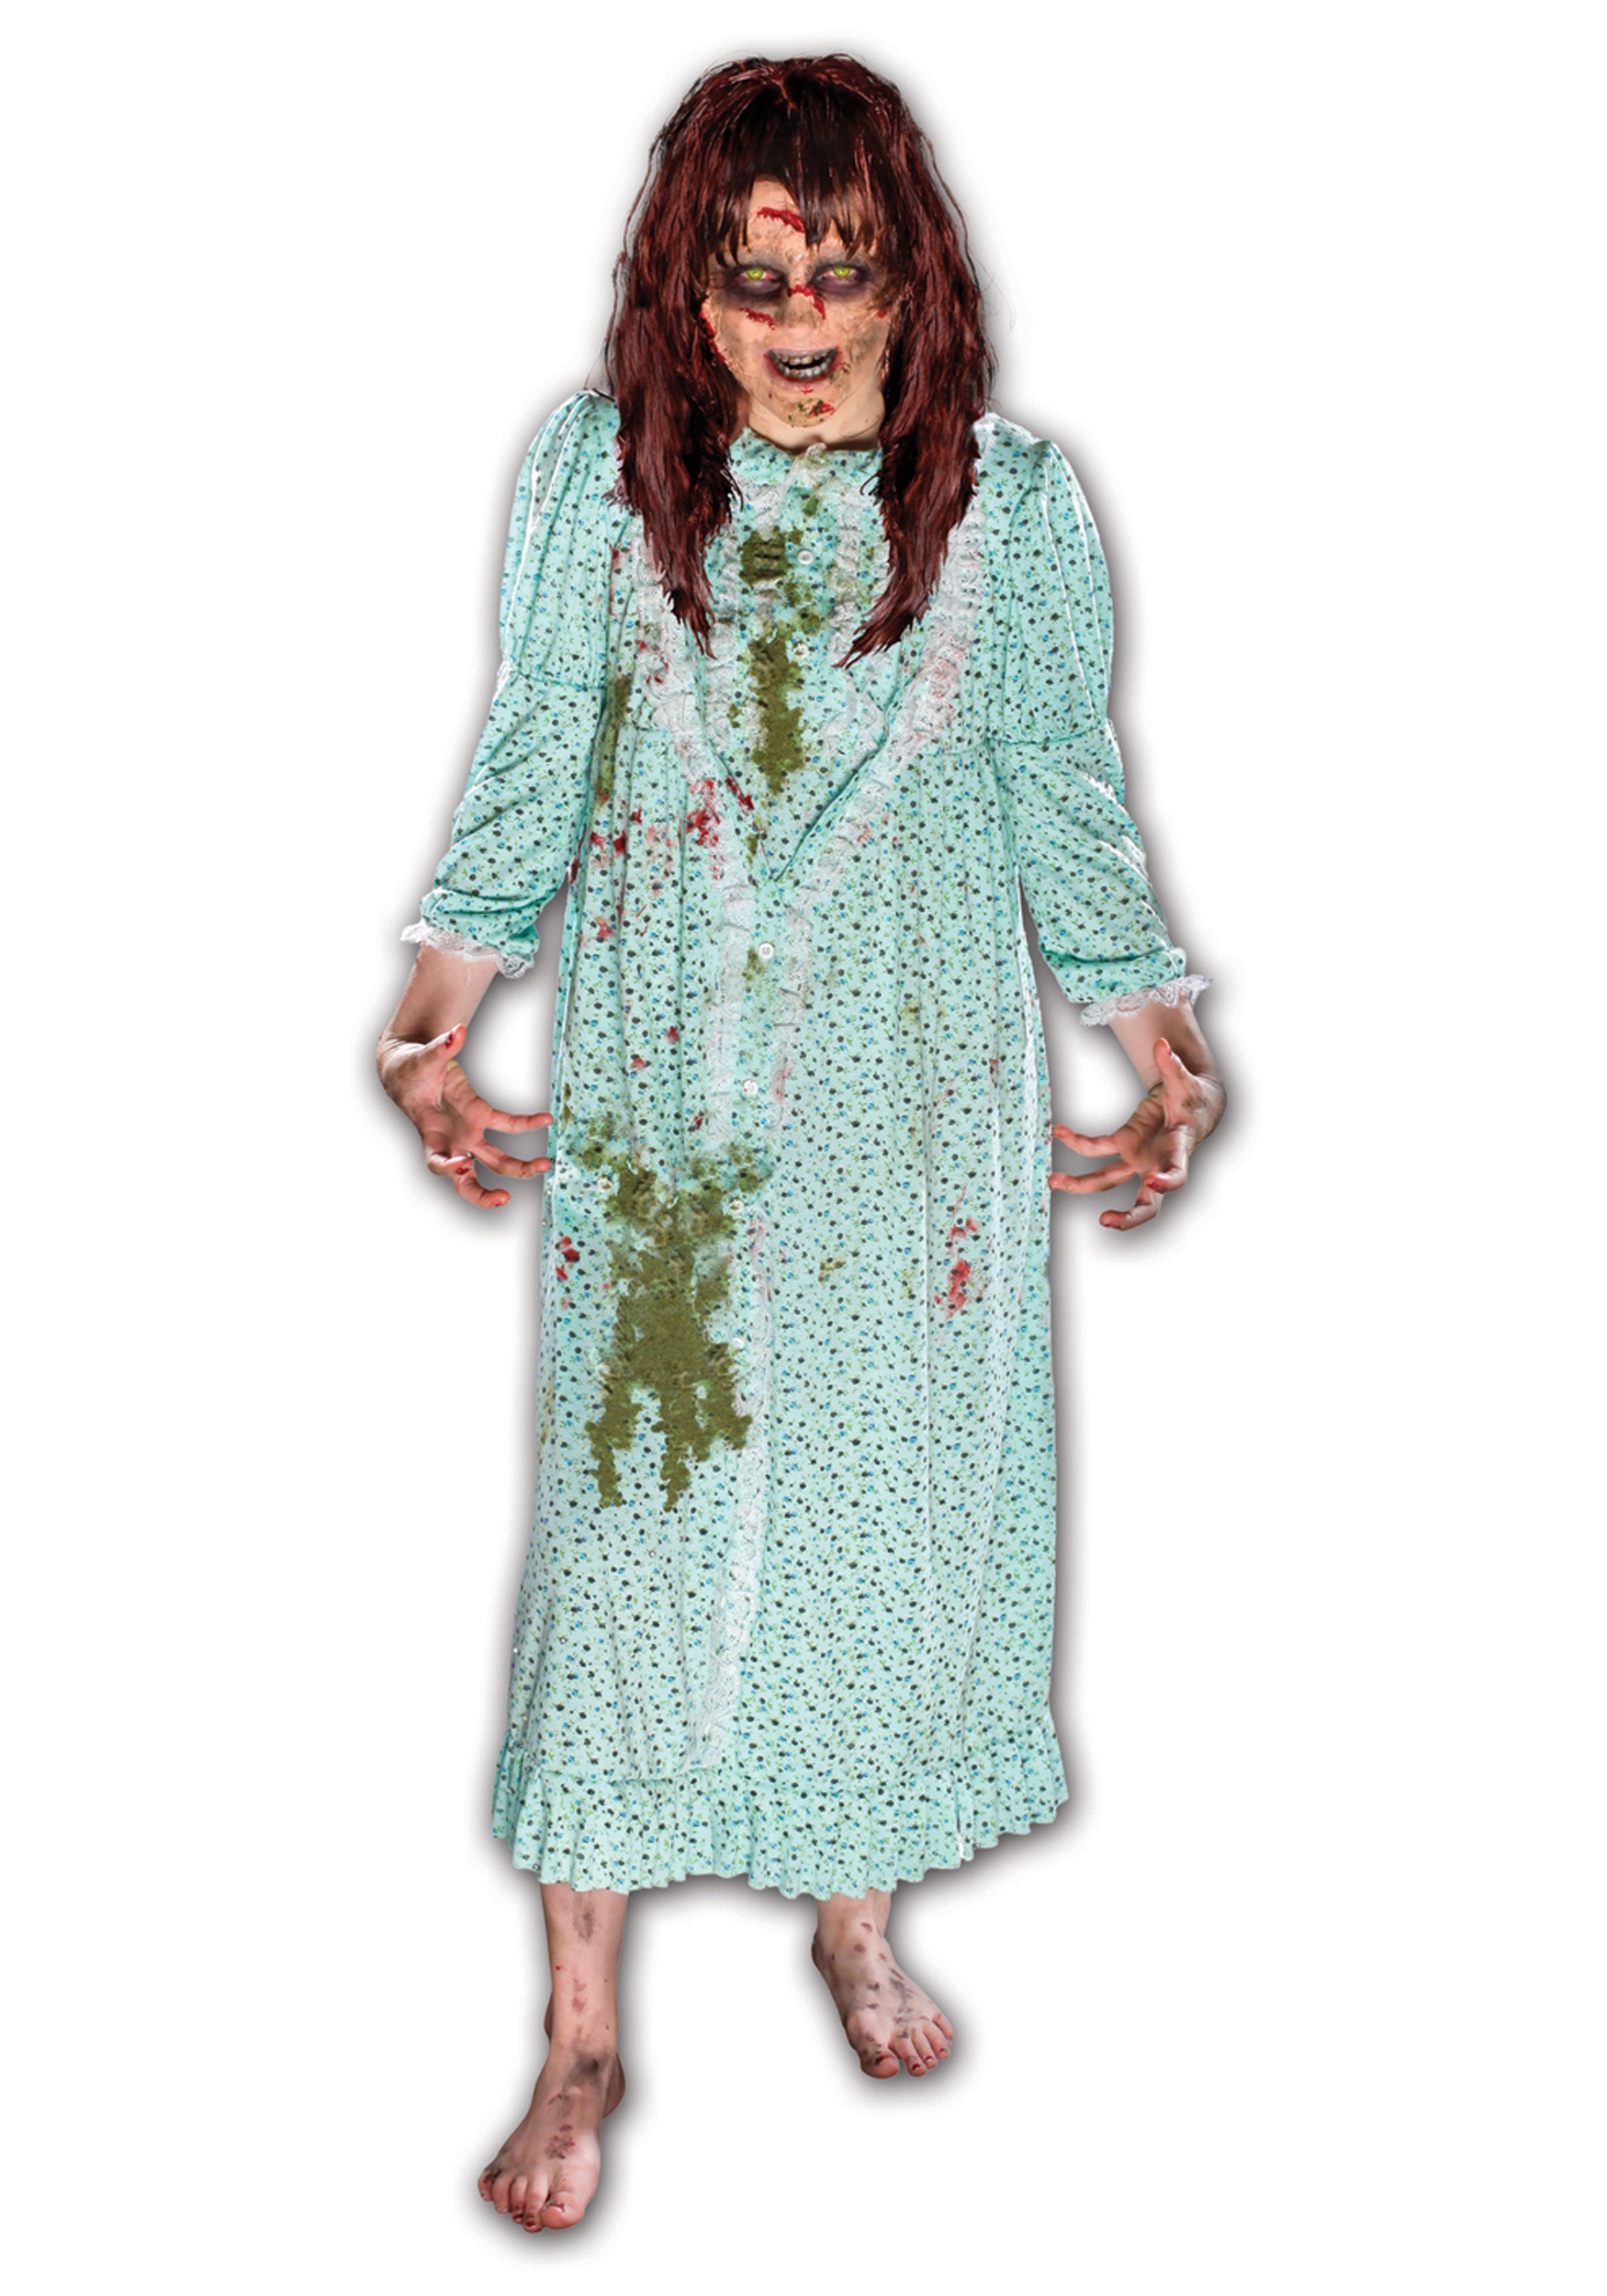 Regan MacNeil The Exorcist Costume